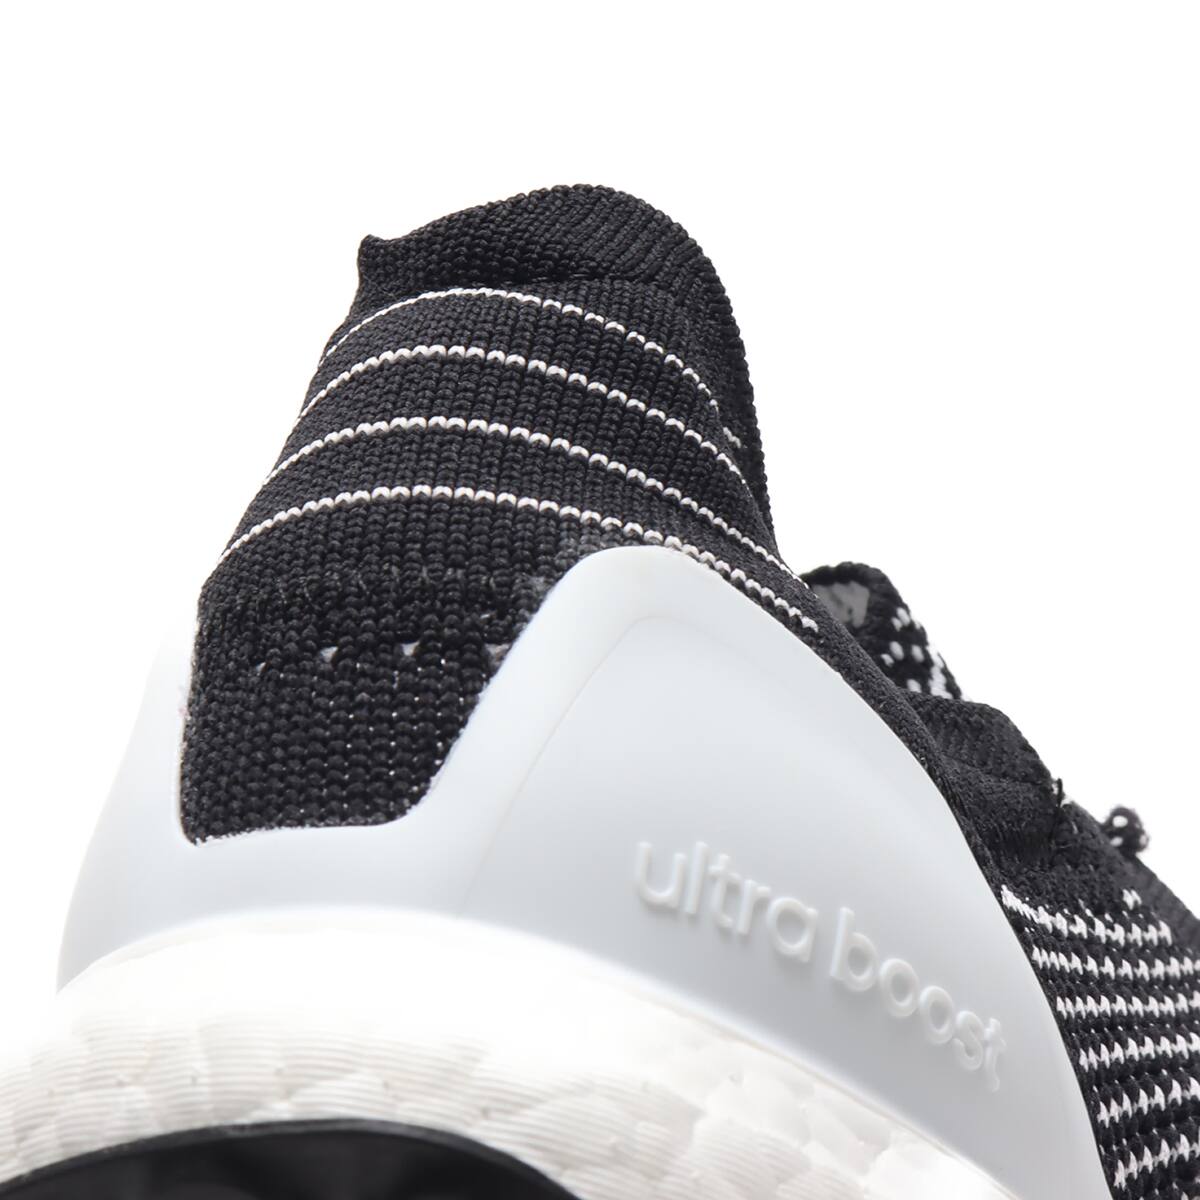 adidas ULTRABOOST DNA PRIME CORE BLACK/FOOTWEAR WHITE/CORE BLACK 20FW-I